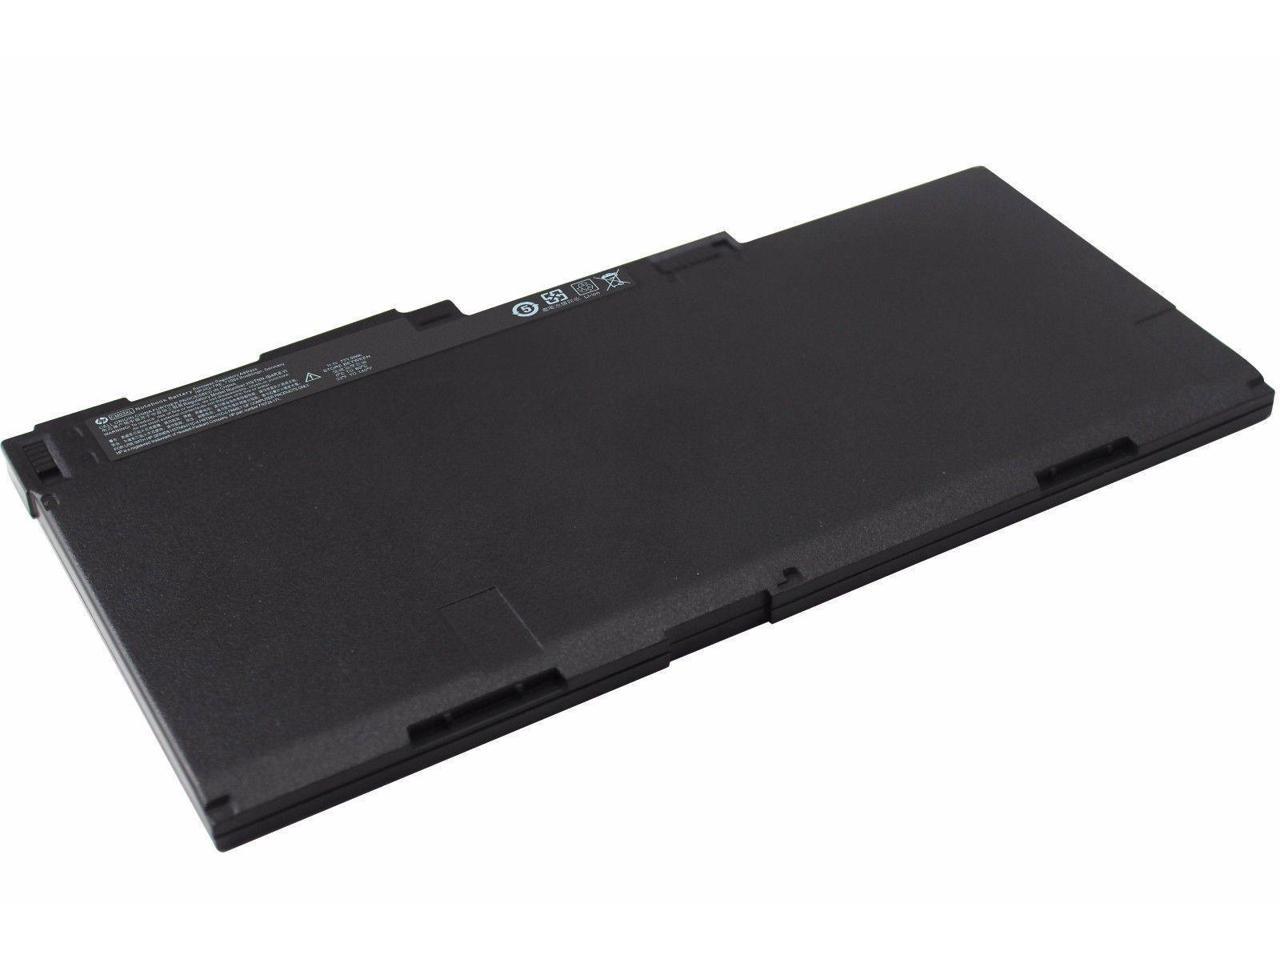 CM03XL CO06XL Laptop Battery Compatible with HP EliteBook 840 845 850 740 745 750 G1 G2 Series 717376-001 CM03050XL CO06 E7U24AA HSTNN-IB4R HSTNN-DB4Q HSTNN-LB4R HP ZBook 14 11.1V/50WH